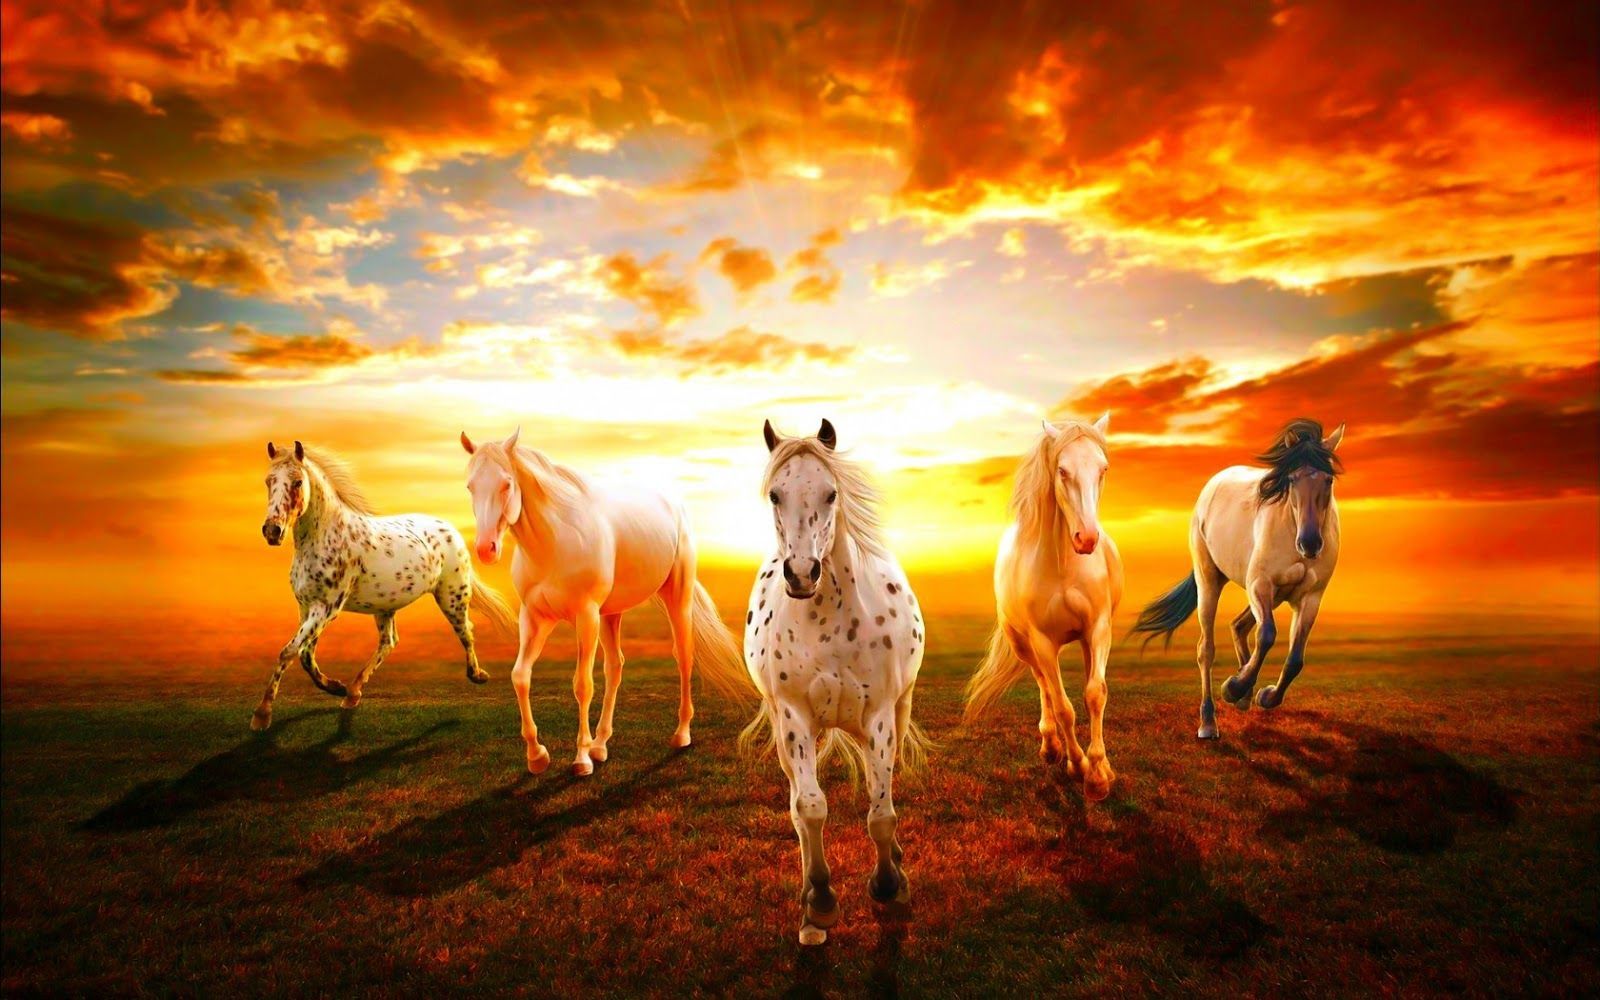 Animated Horses On the Beach. Wild Horses. HD Desktop Wallpaper. Horse picture, Horses, Beautiful horses